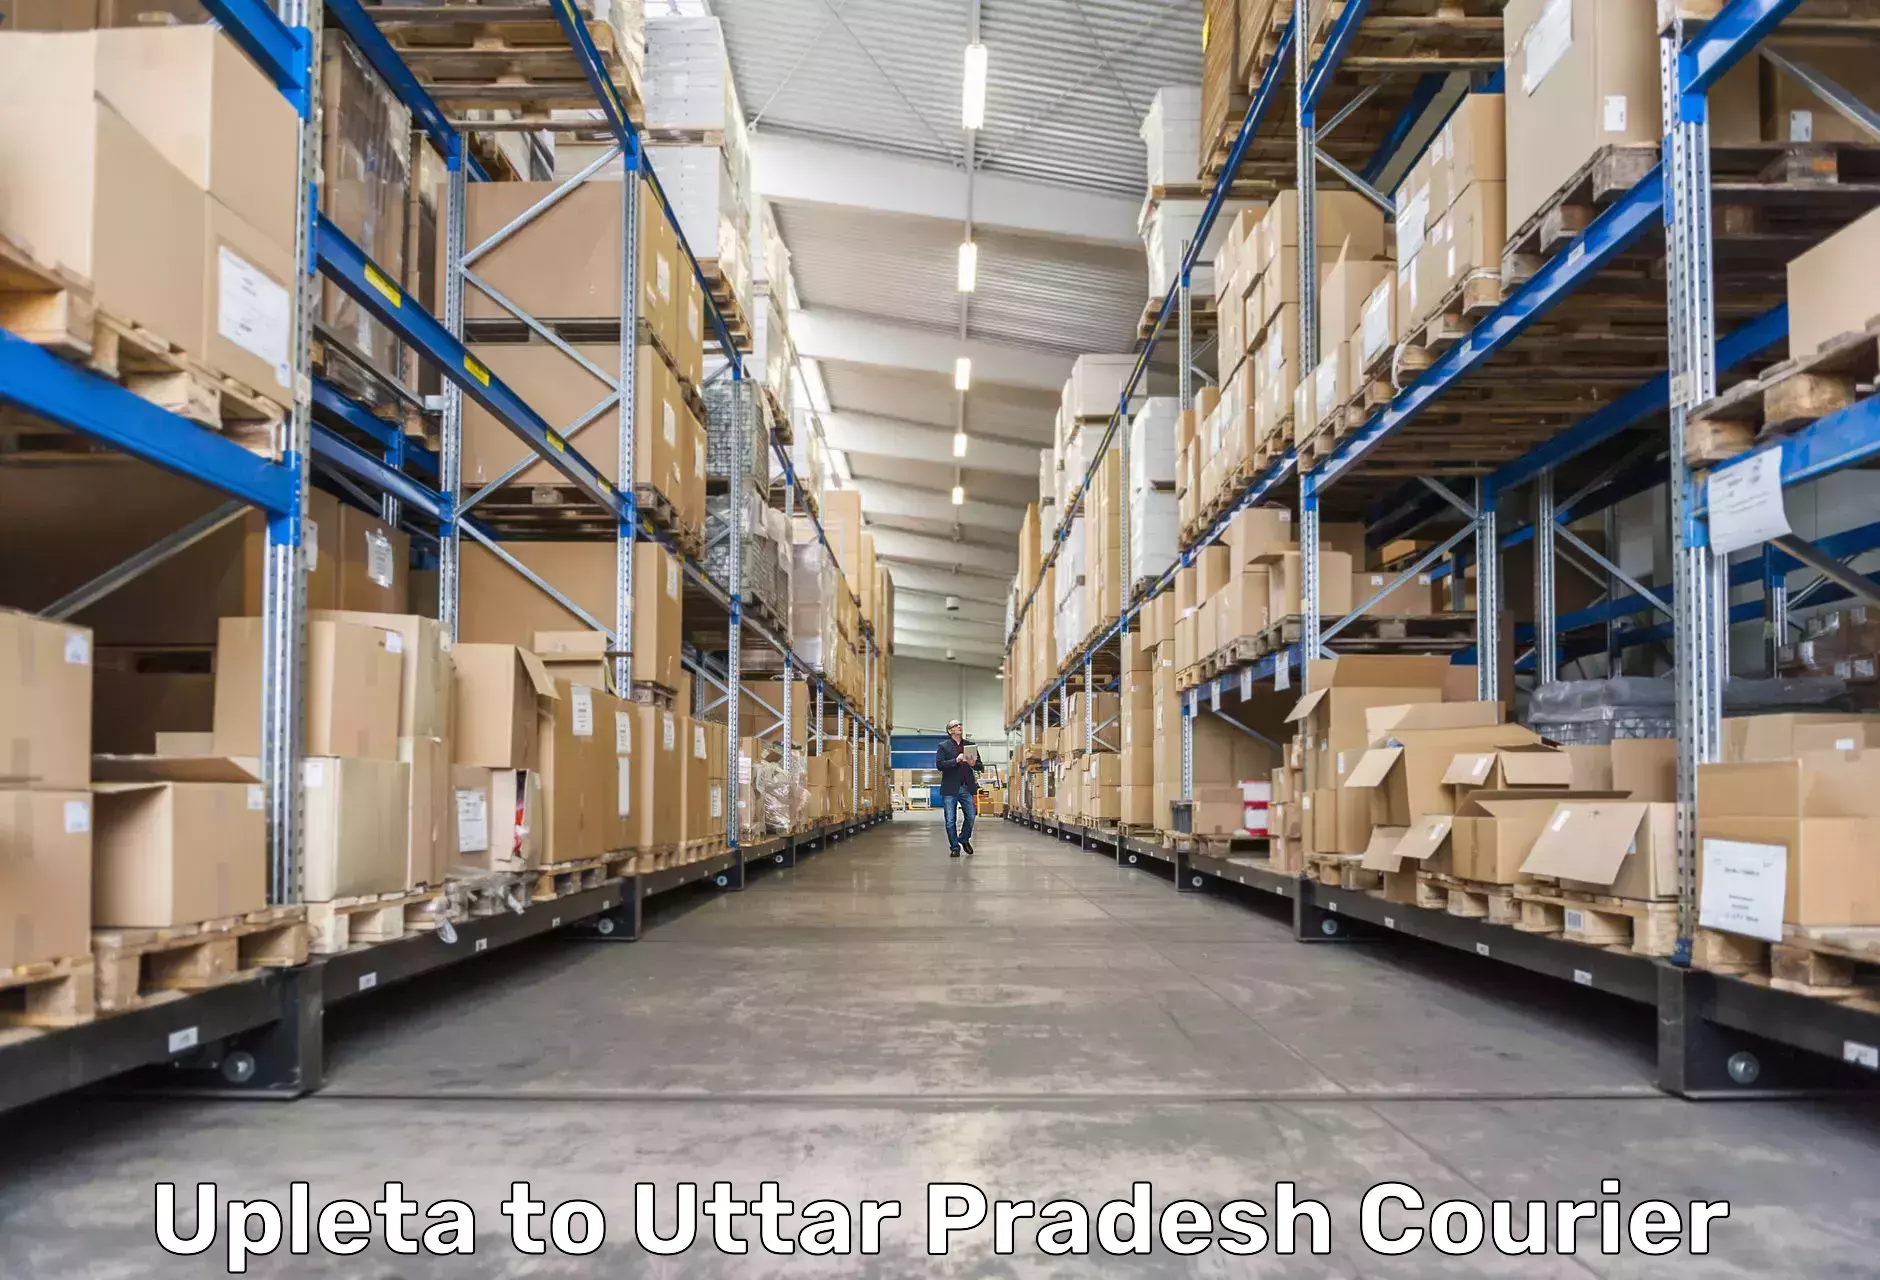 Express logistics providers Upleta to Uttar Pradesh